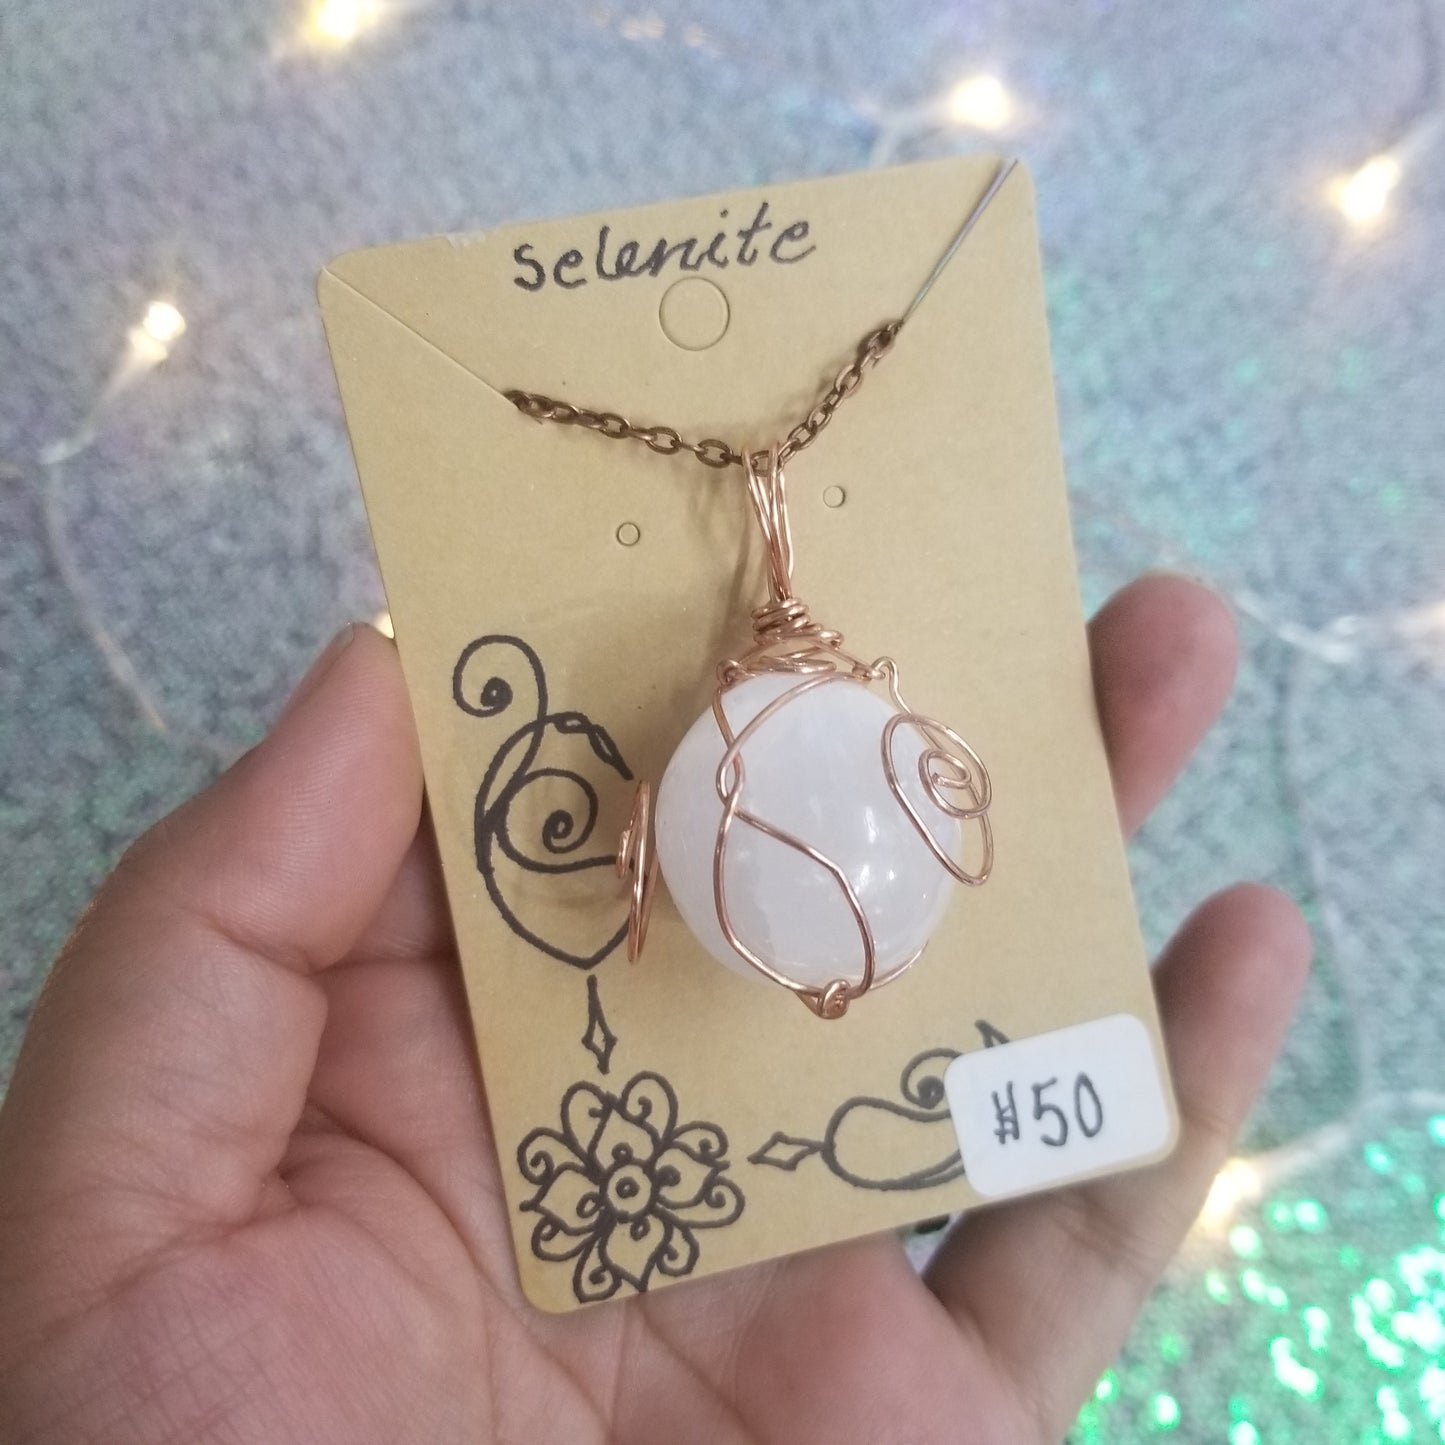 Selenite Necklace